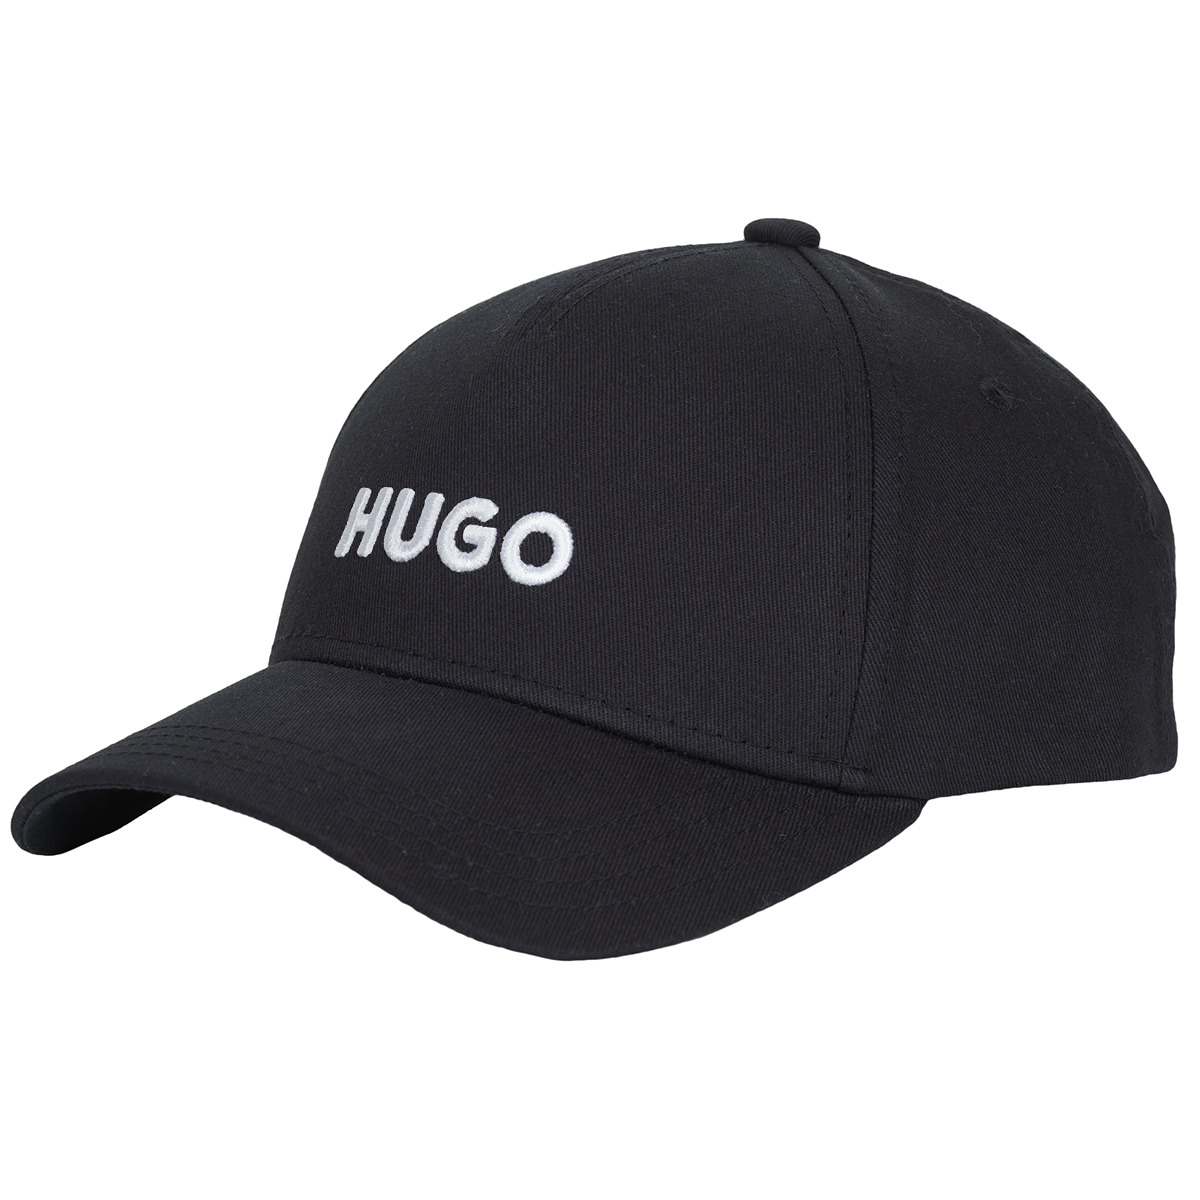 HUGO Jude-BL Black - Fast delivery | Spartoo Europe ! - Accessorie Caps Men  39,00 €